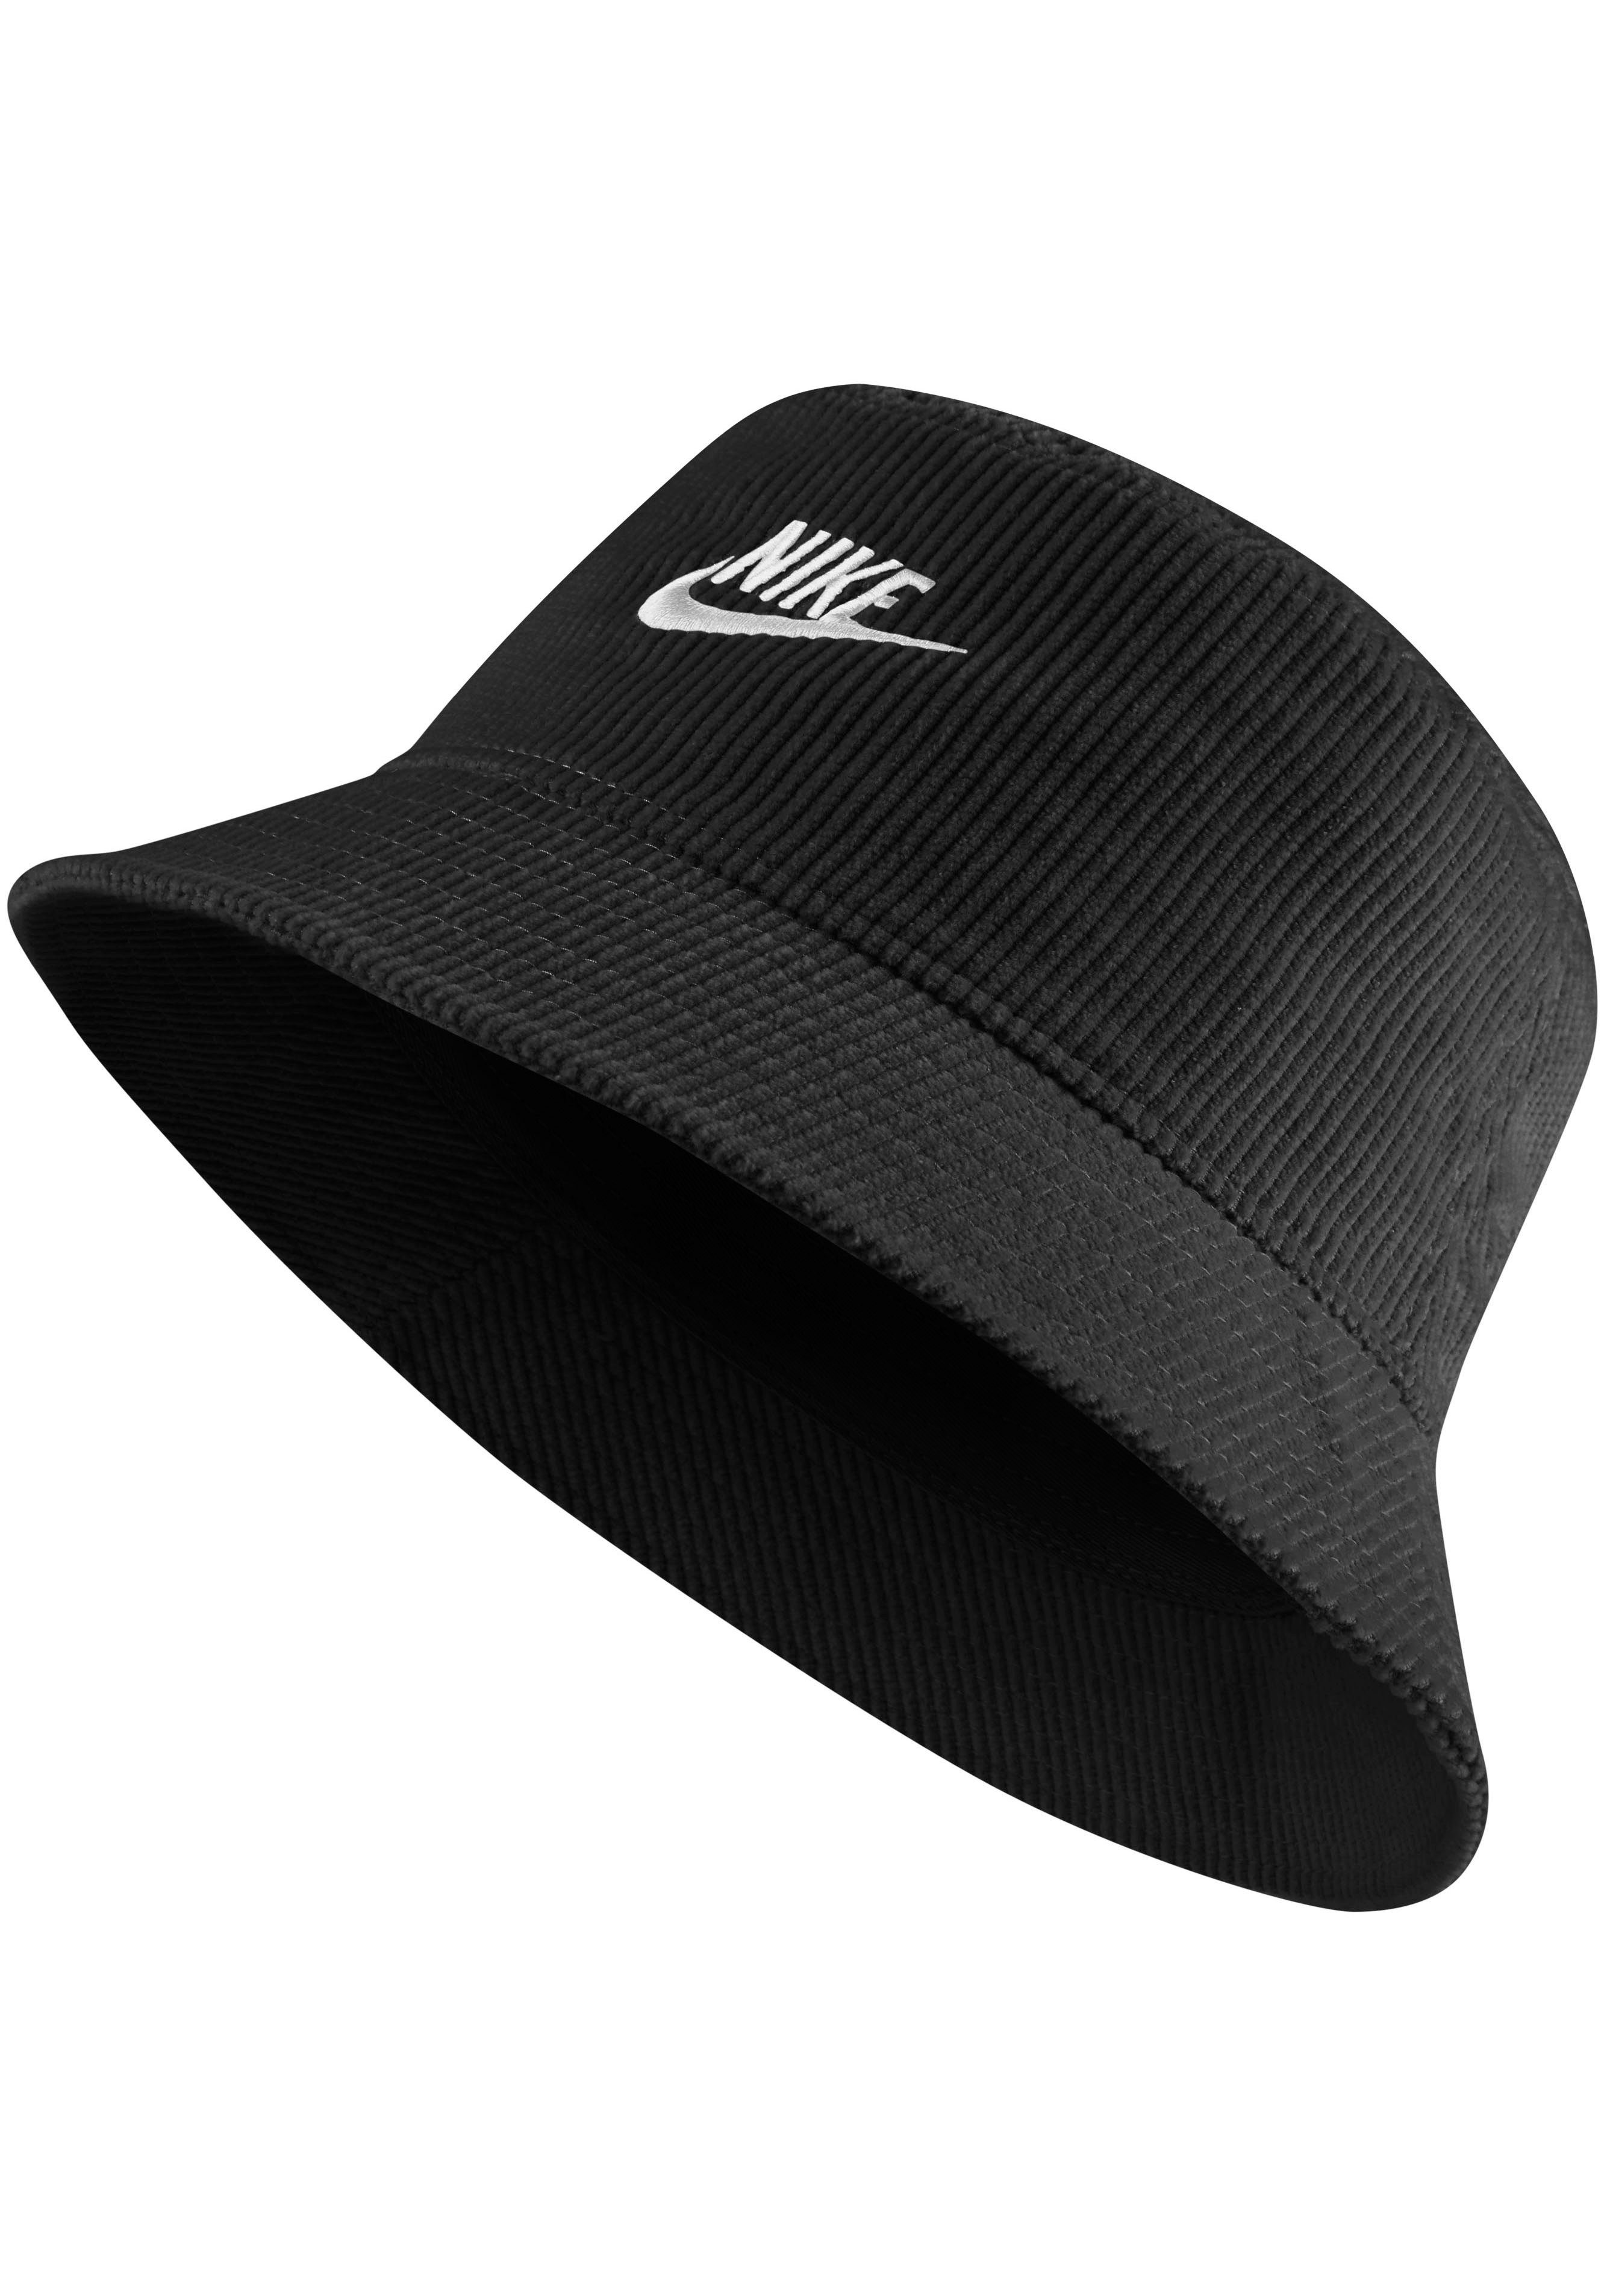 Nike Sportswear Fischerhut »Nike Sportswear Bucket Hat« online kaufen | OTTO